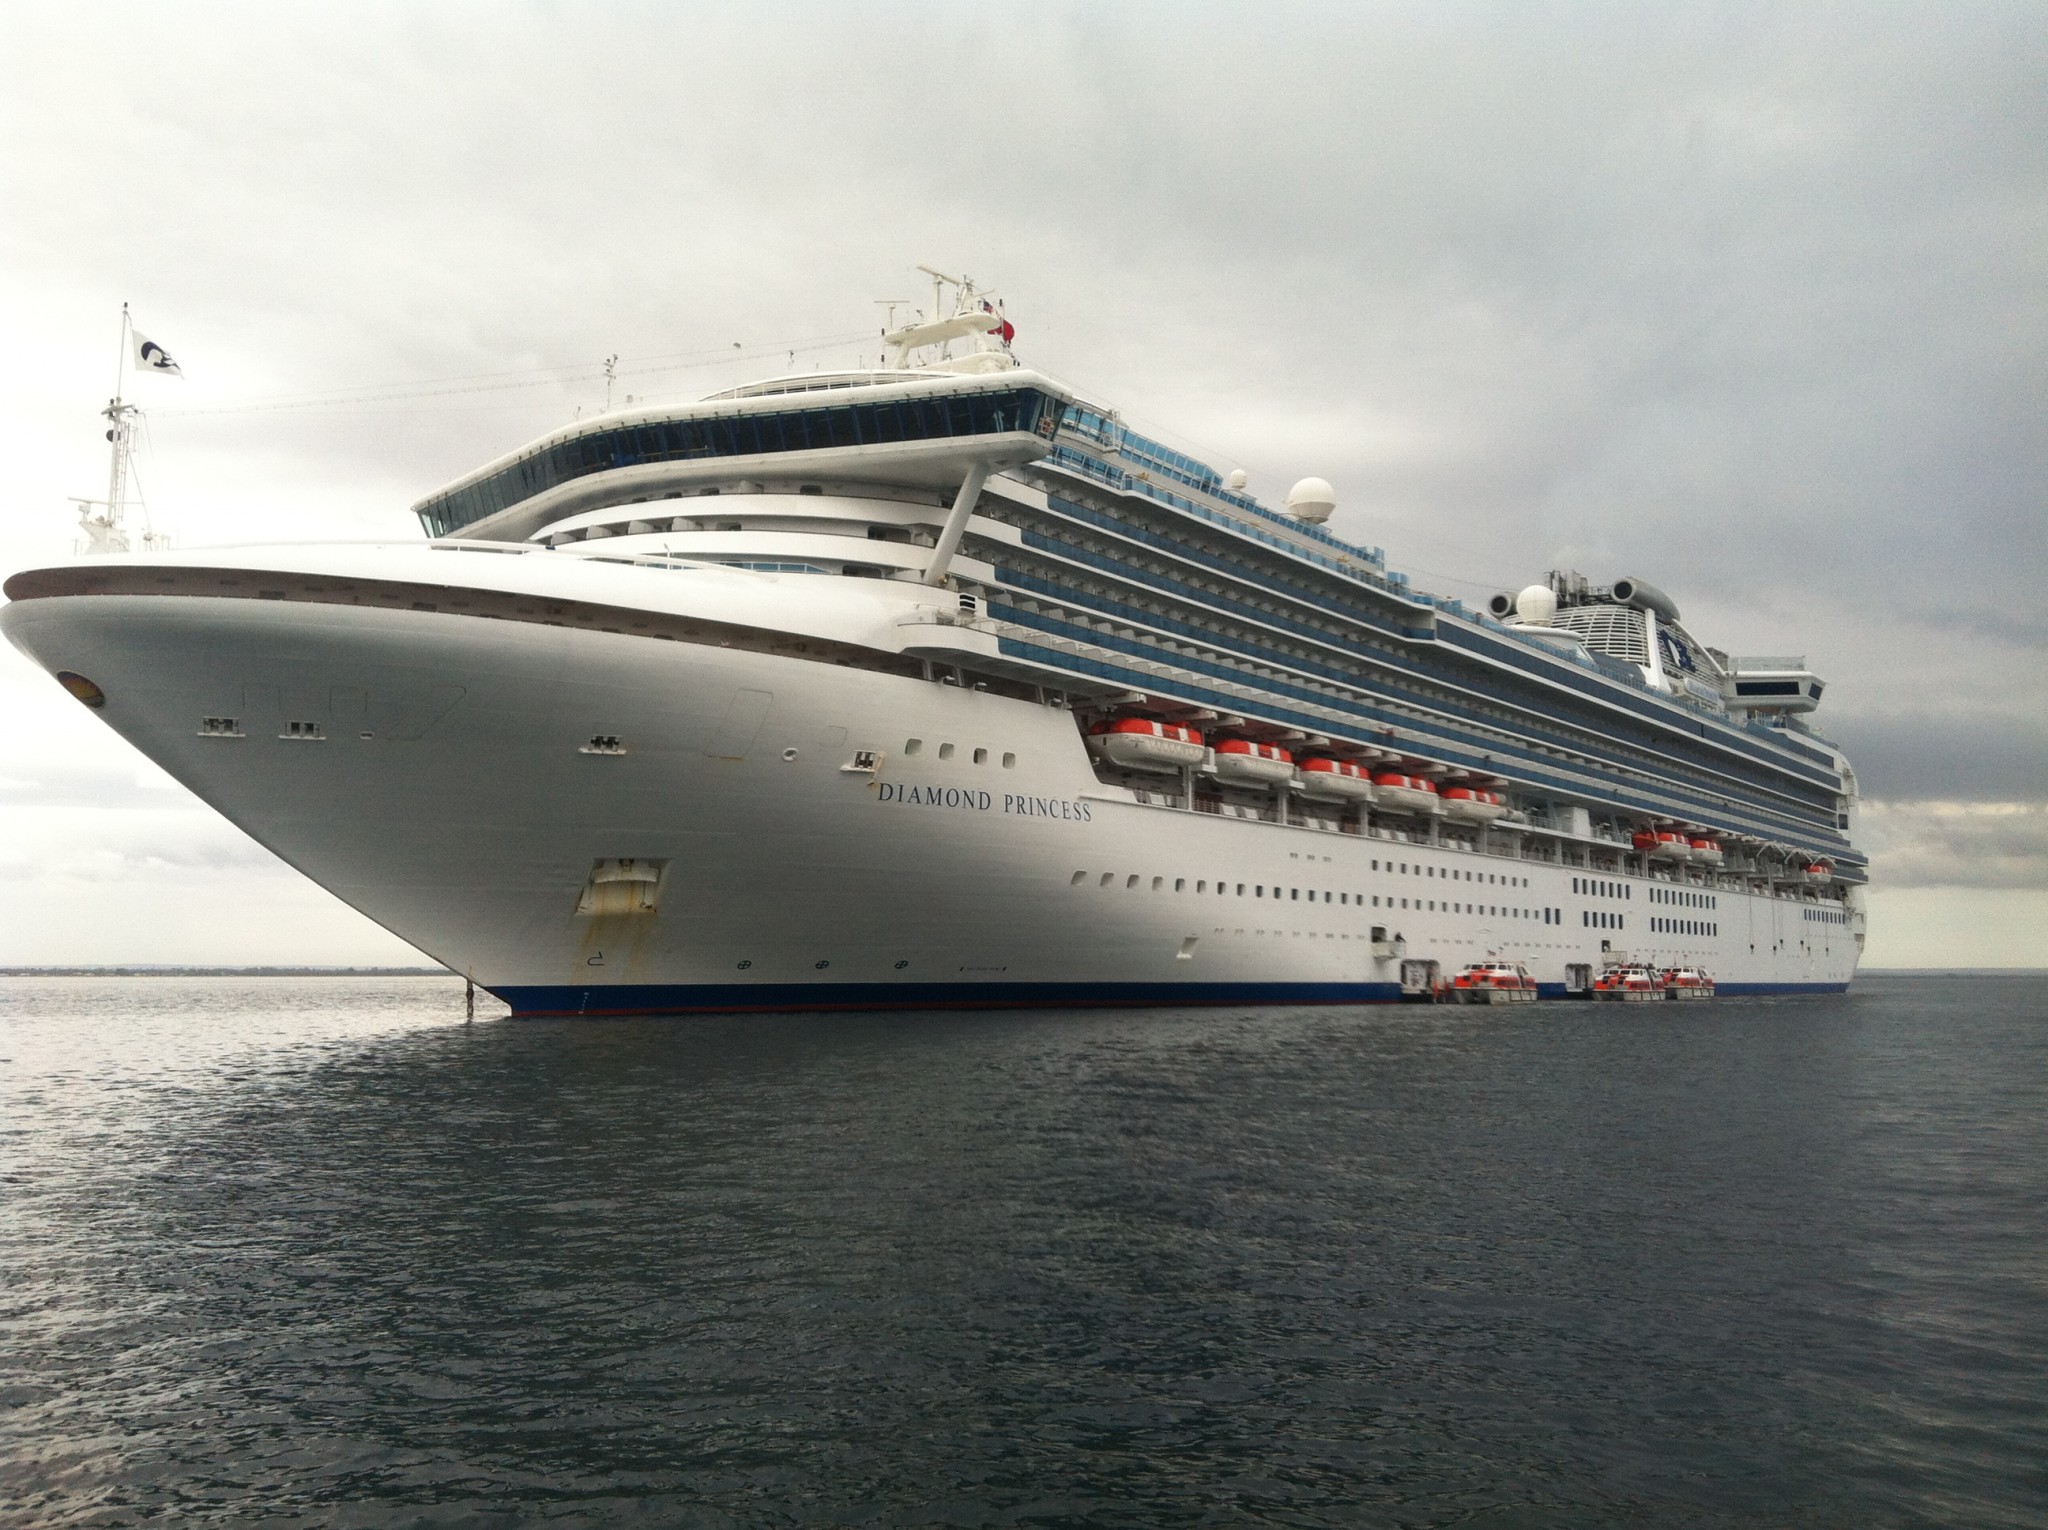 Cruise ships bring $1.8 million